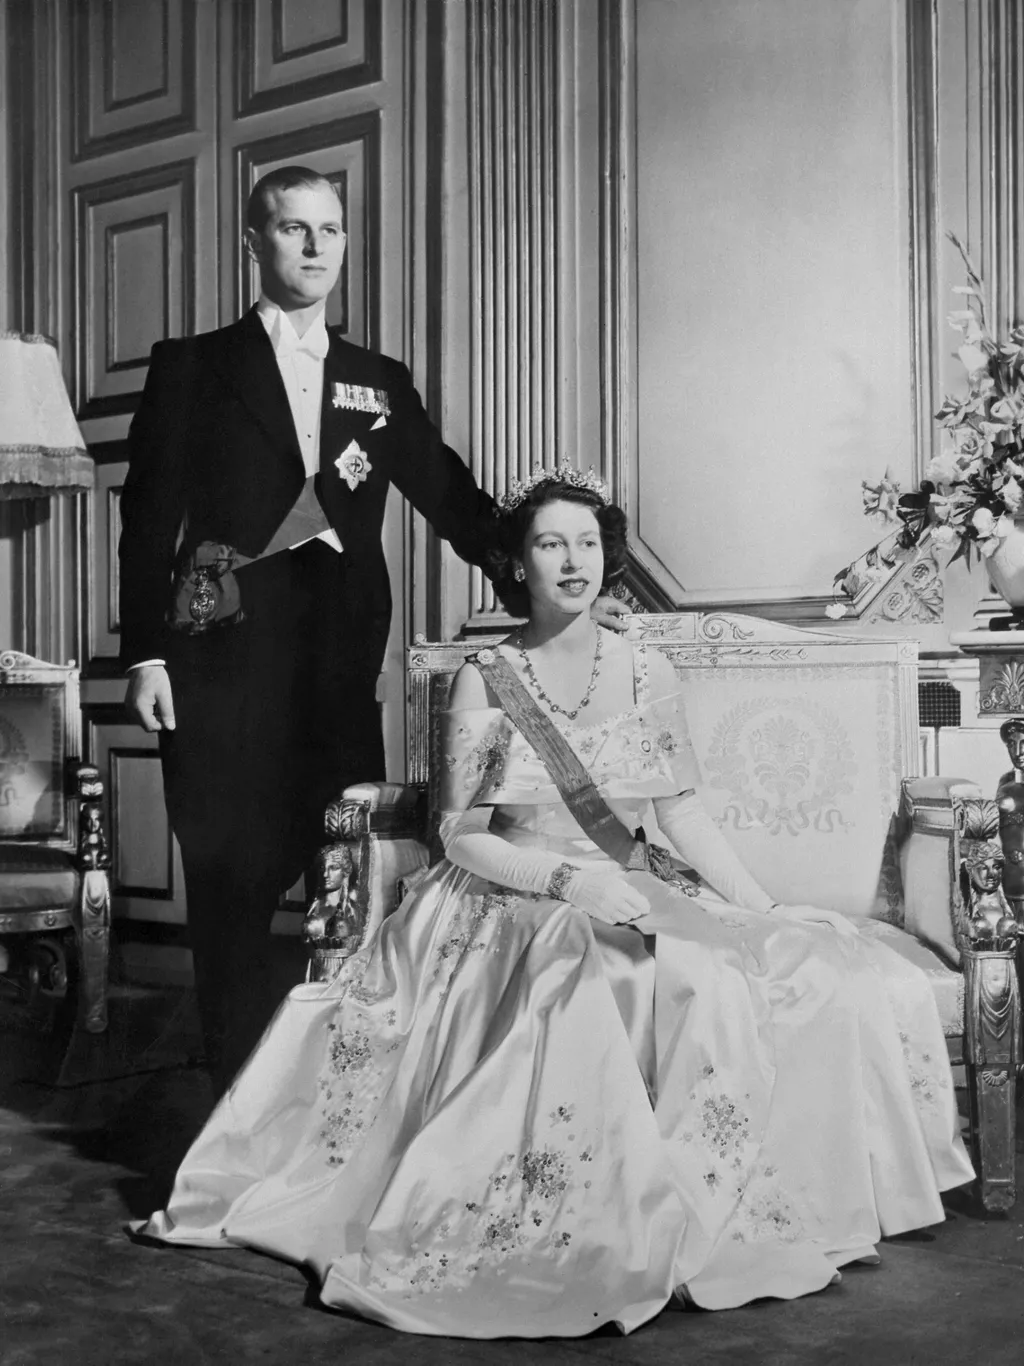 Fülöp edinburgh-i herceg, Prince Philip, Duke of Edinburgh, II. Erzsébet brit királynő férje, angol, 2021.02.21.  Vertical PRINCESS PRINCE COUPLE ROYAL FAMILY HUSBAND SMILING GROUP PICTURE BLACK AND WHITE PICTURE 